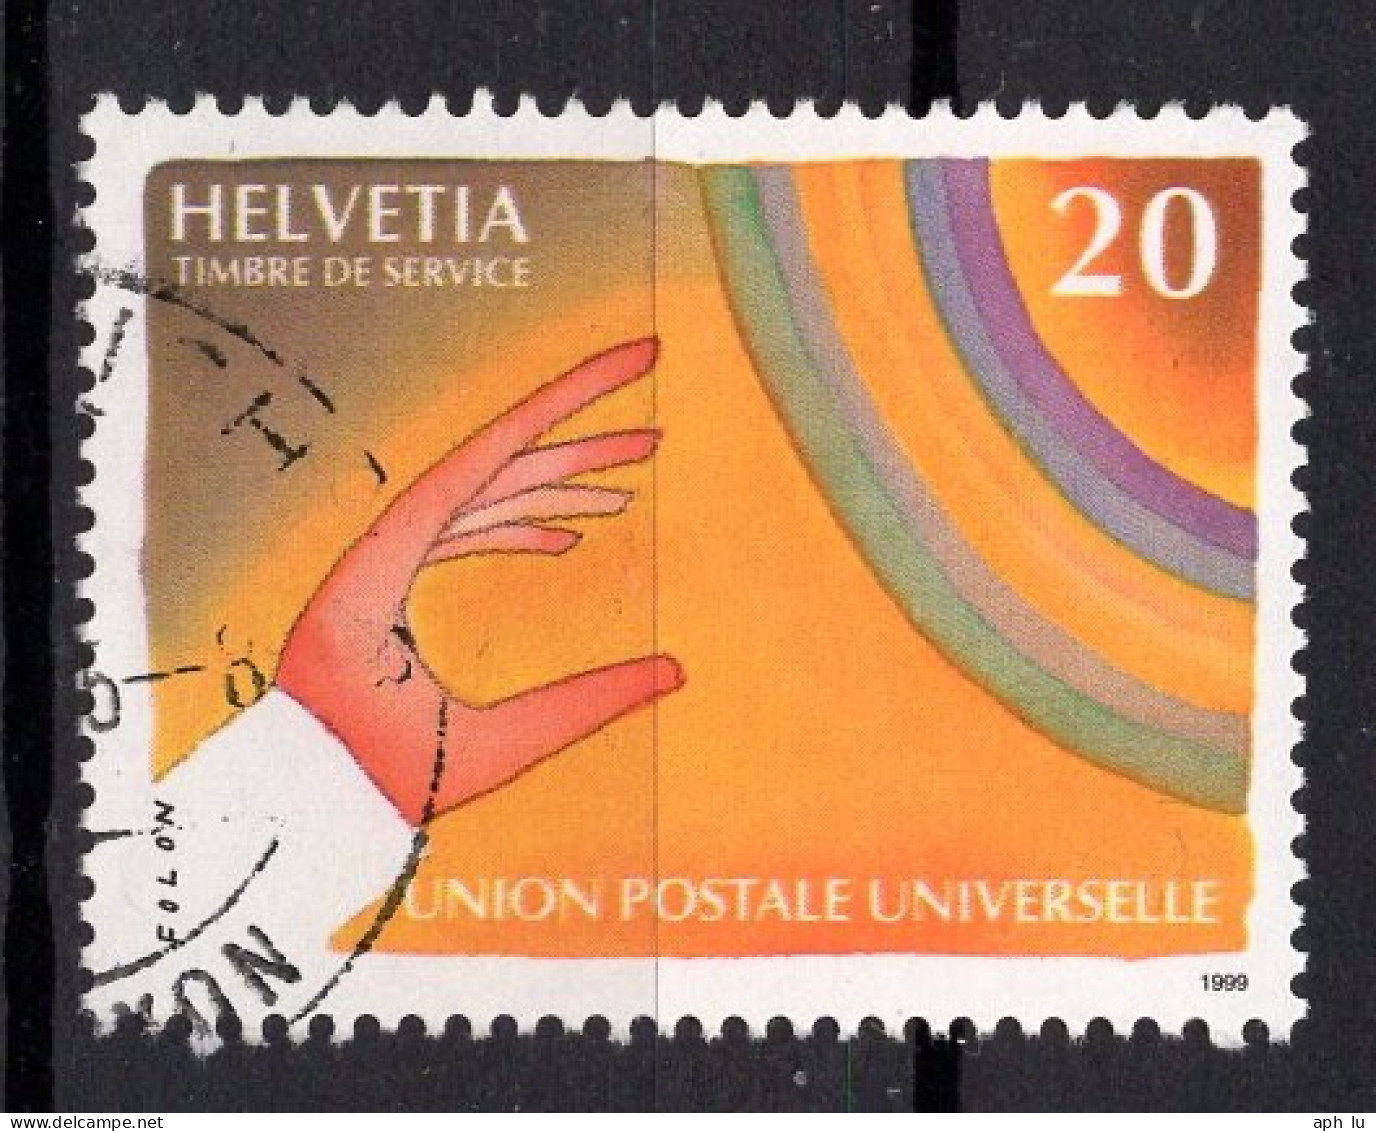 Union Postale Universelle (UPU) (h600903) - Officials